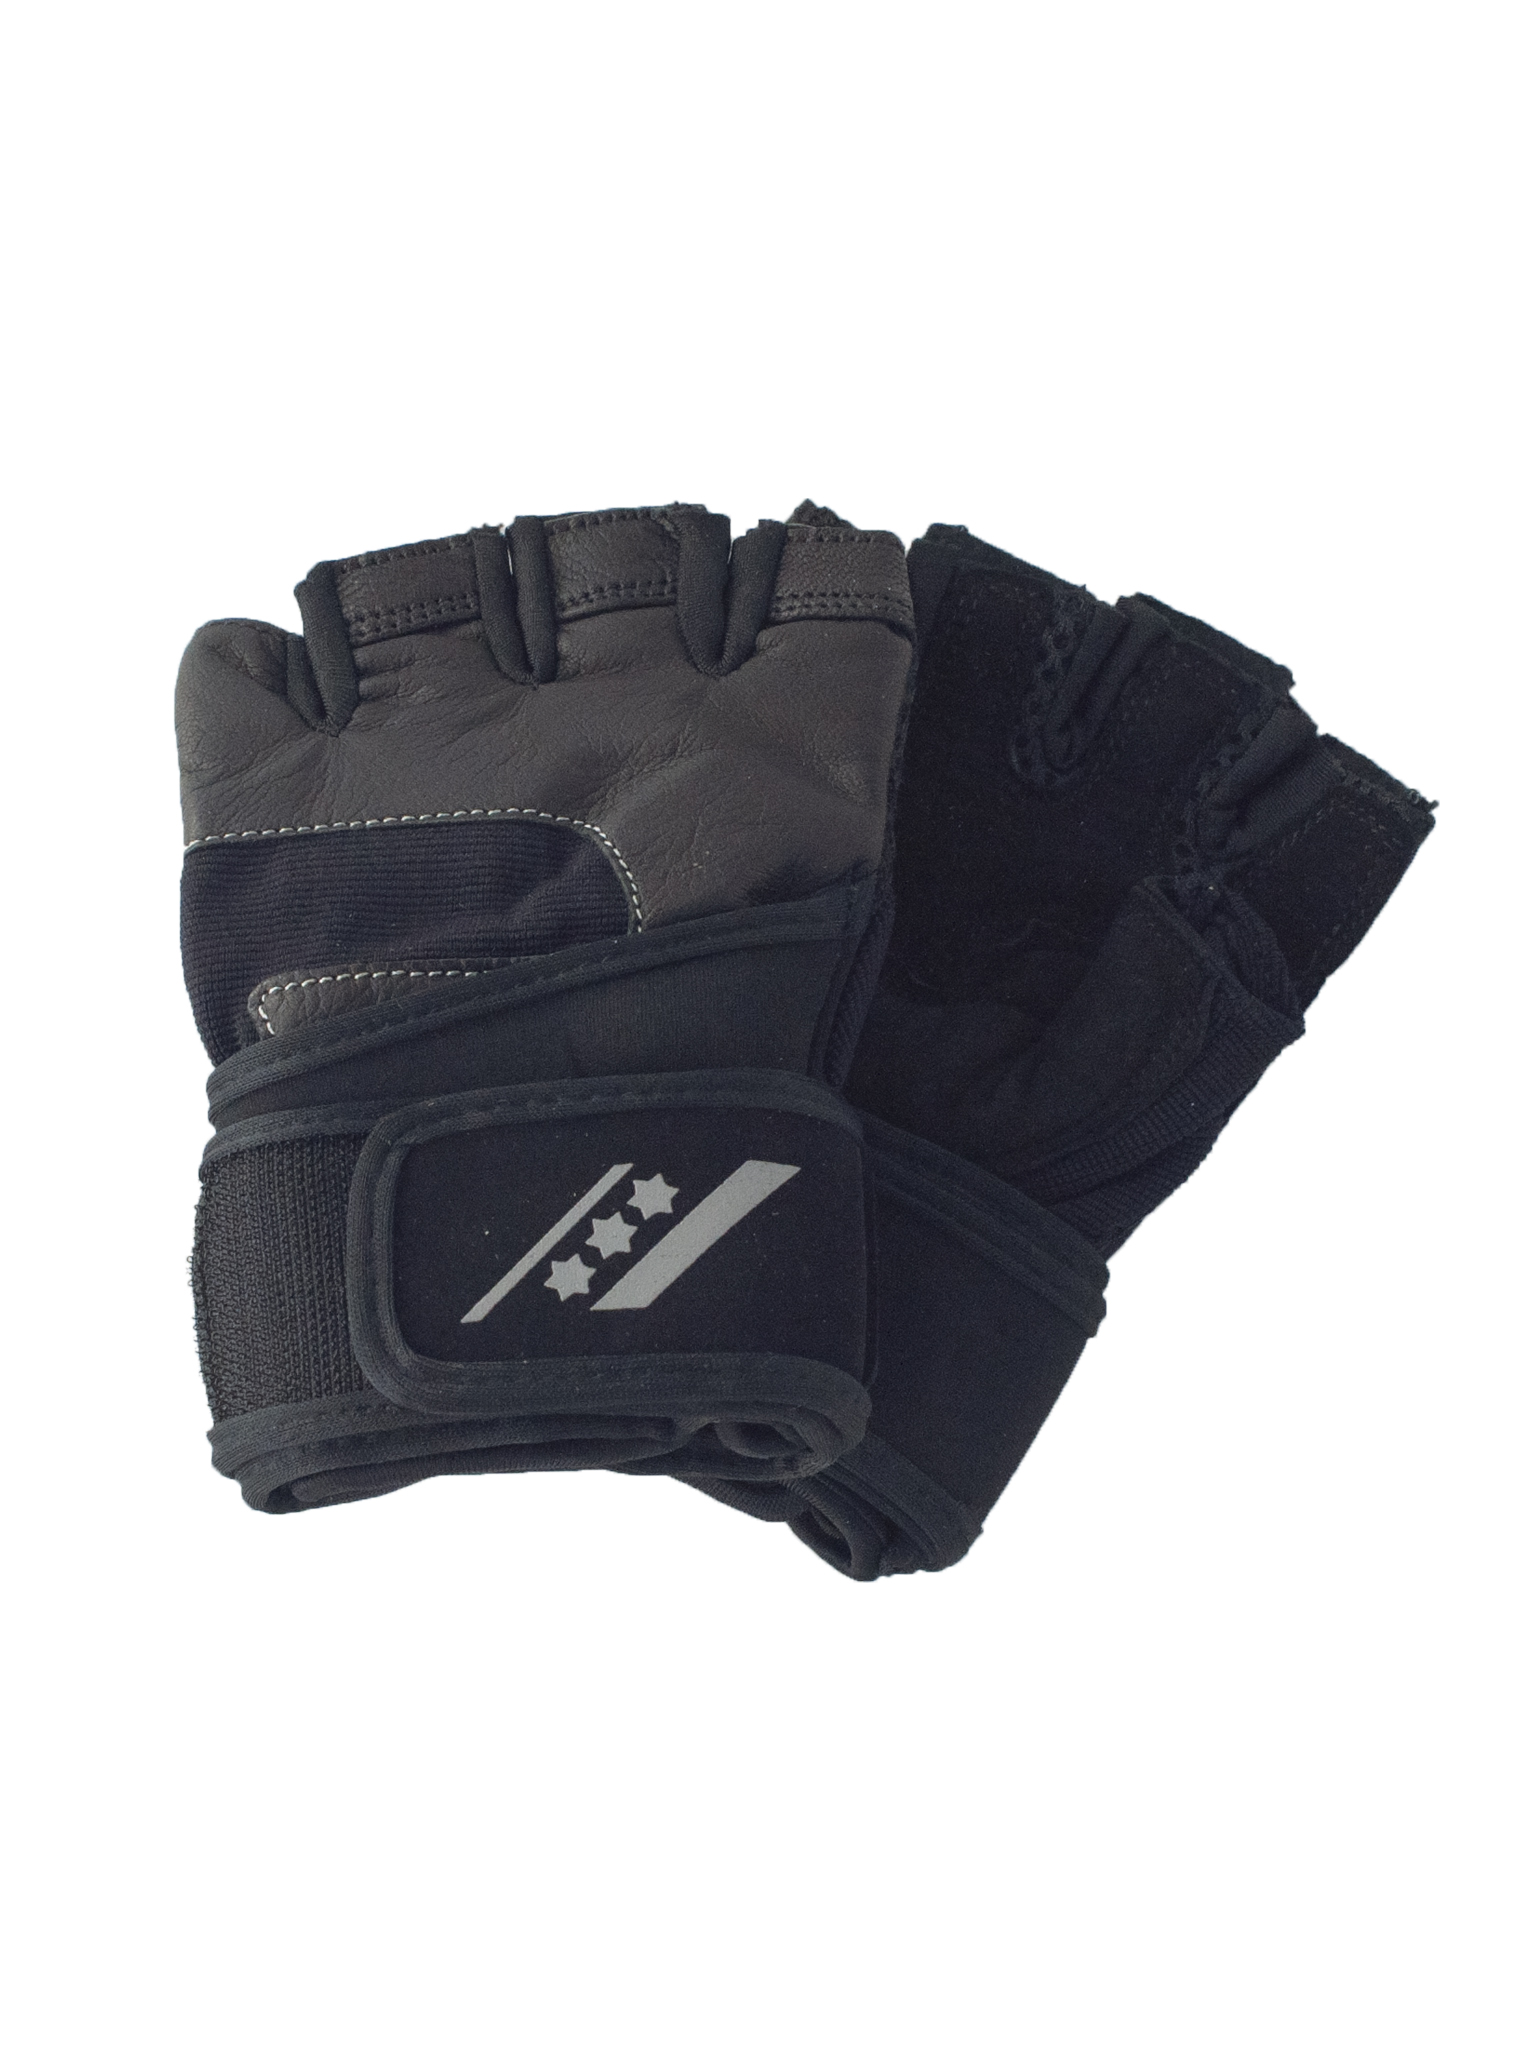 Profi IV fitness gloves